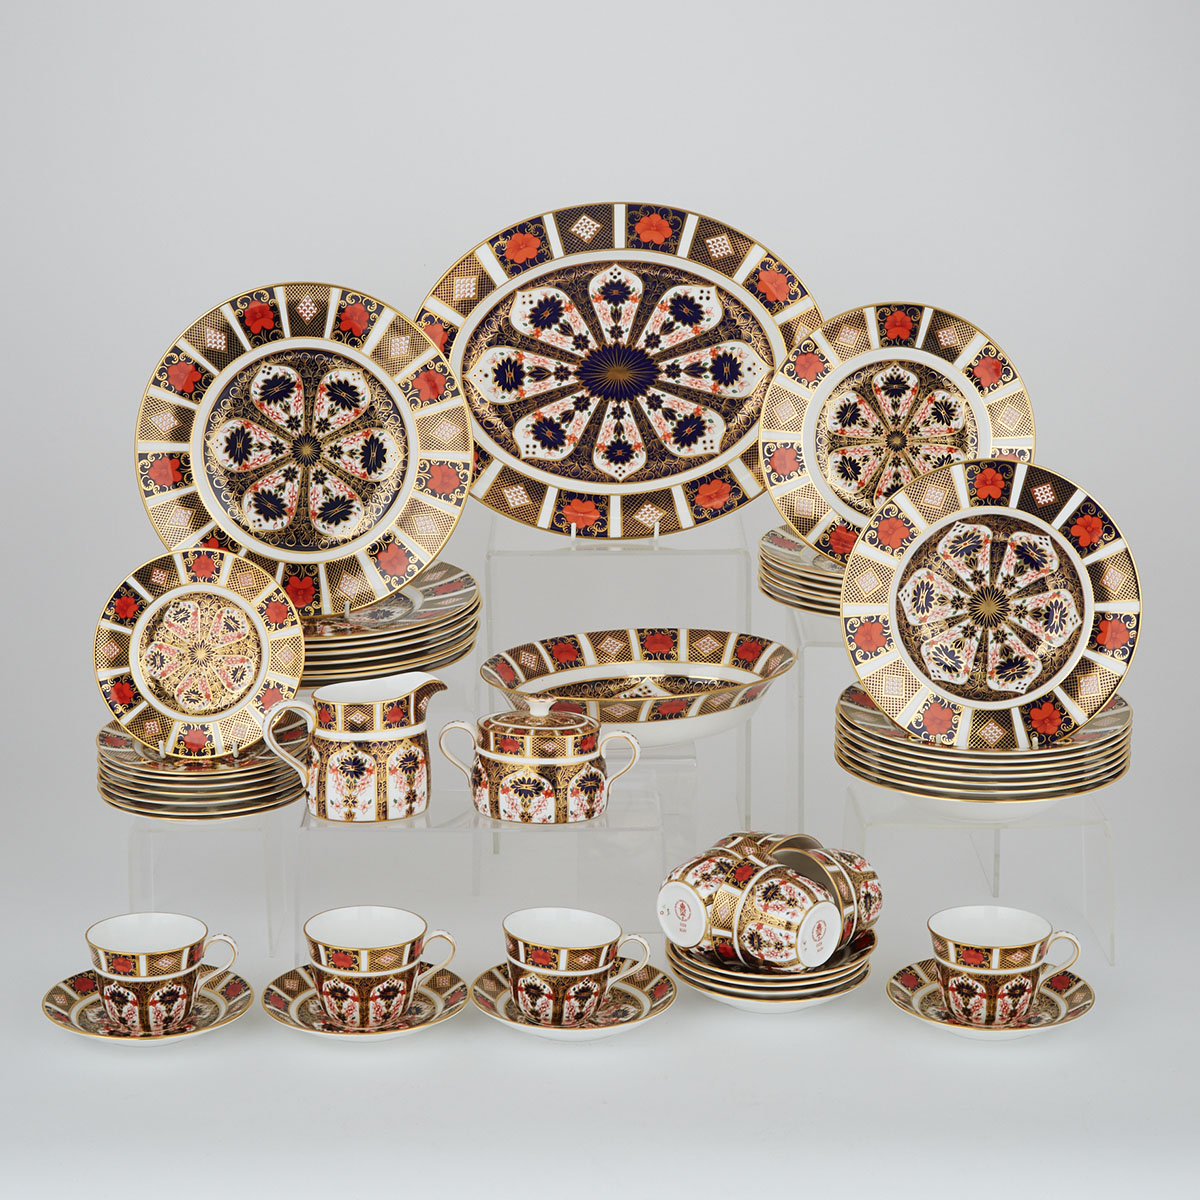 Royal Crown Derby ‘Imari’ (1128) Pattern Service, 20th century